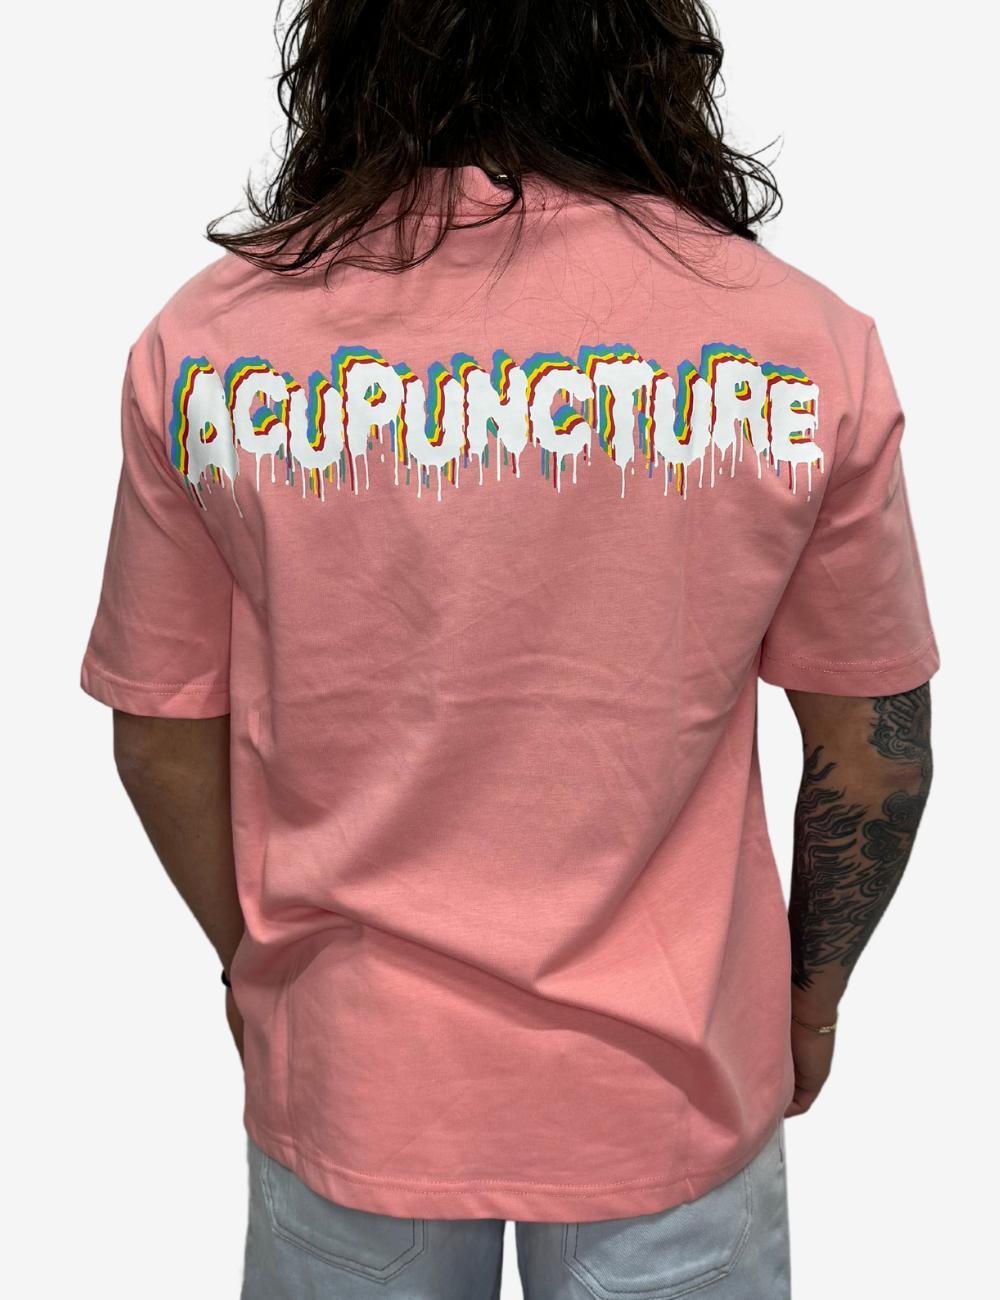 T-Shirt Acupuncture con logo Inverted Emblem